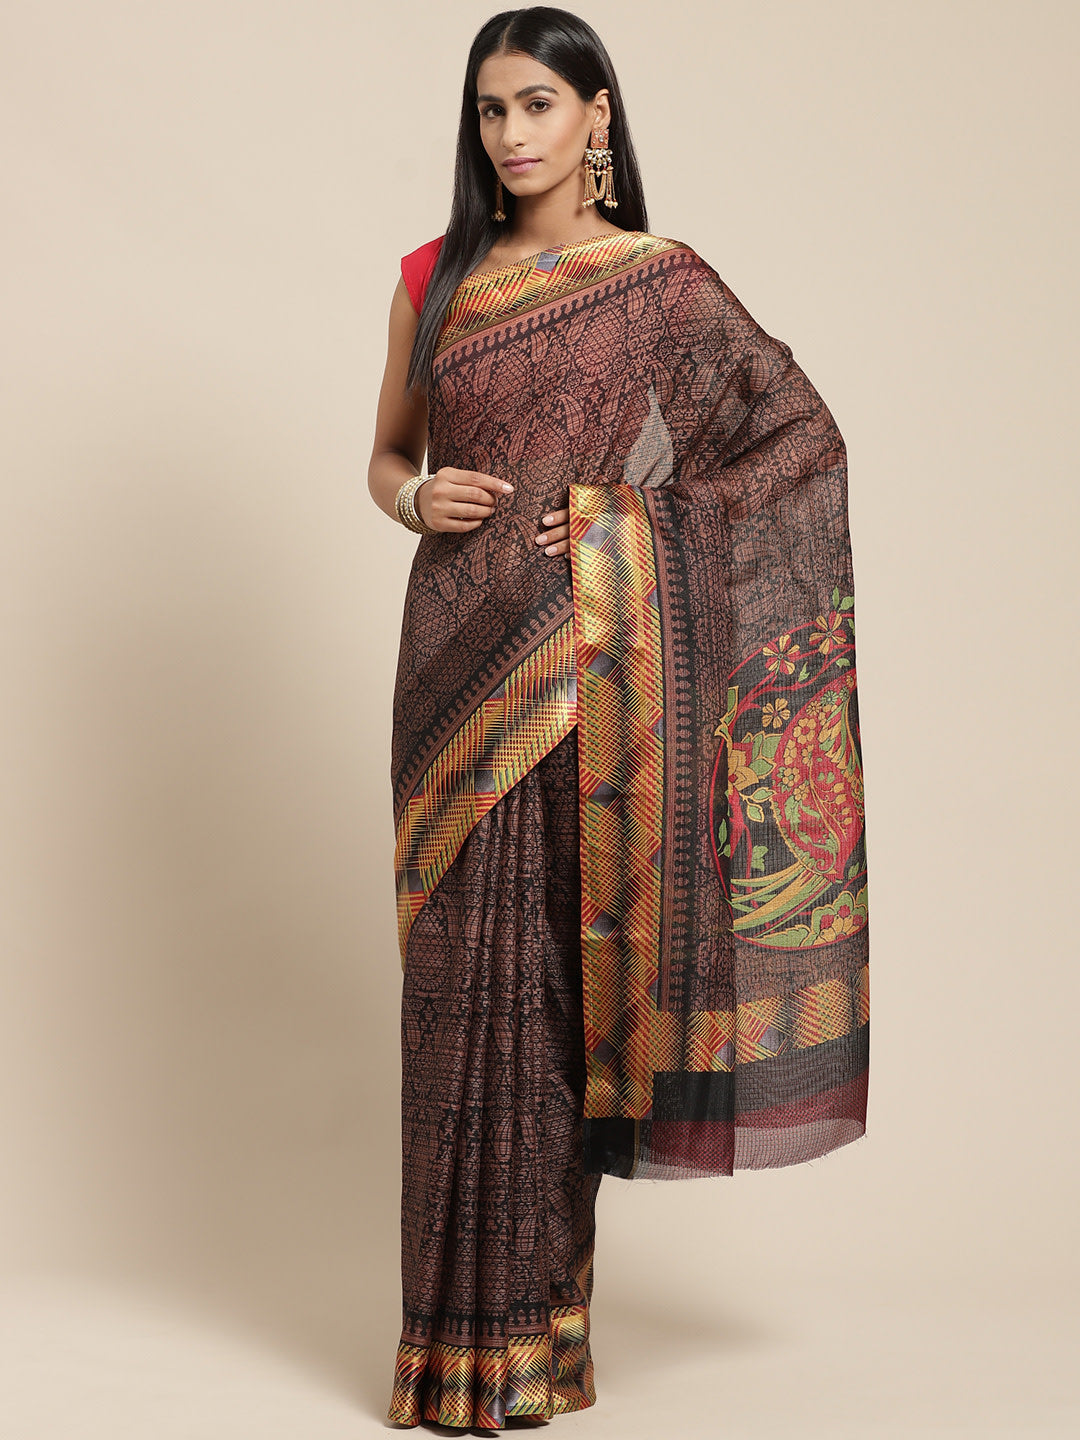 Women's Black Cotton Blend Printed Saree - Ahika